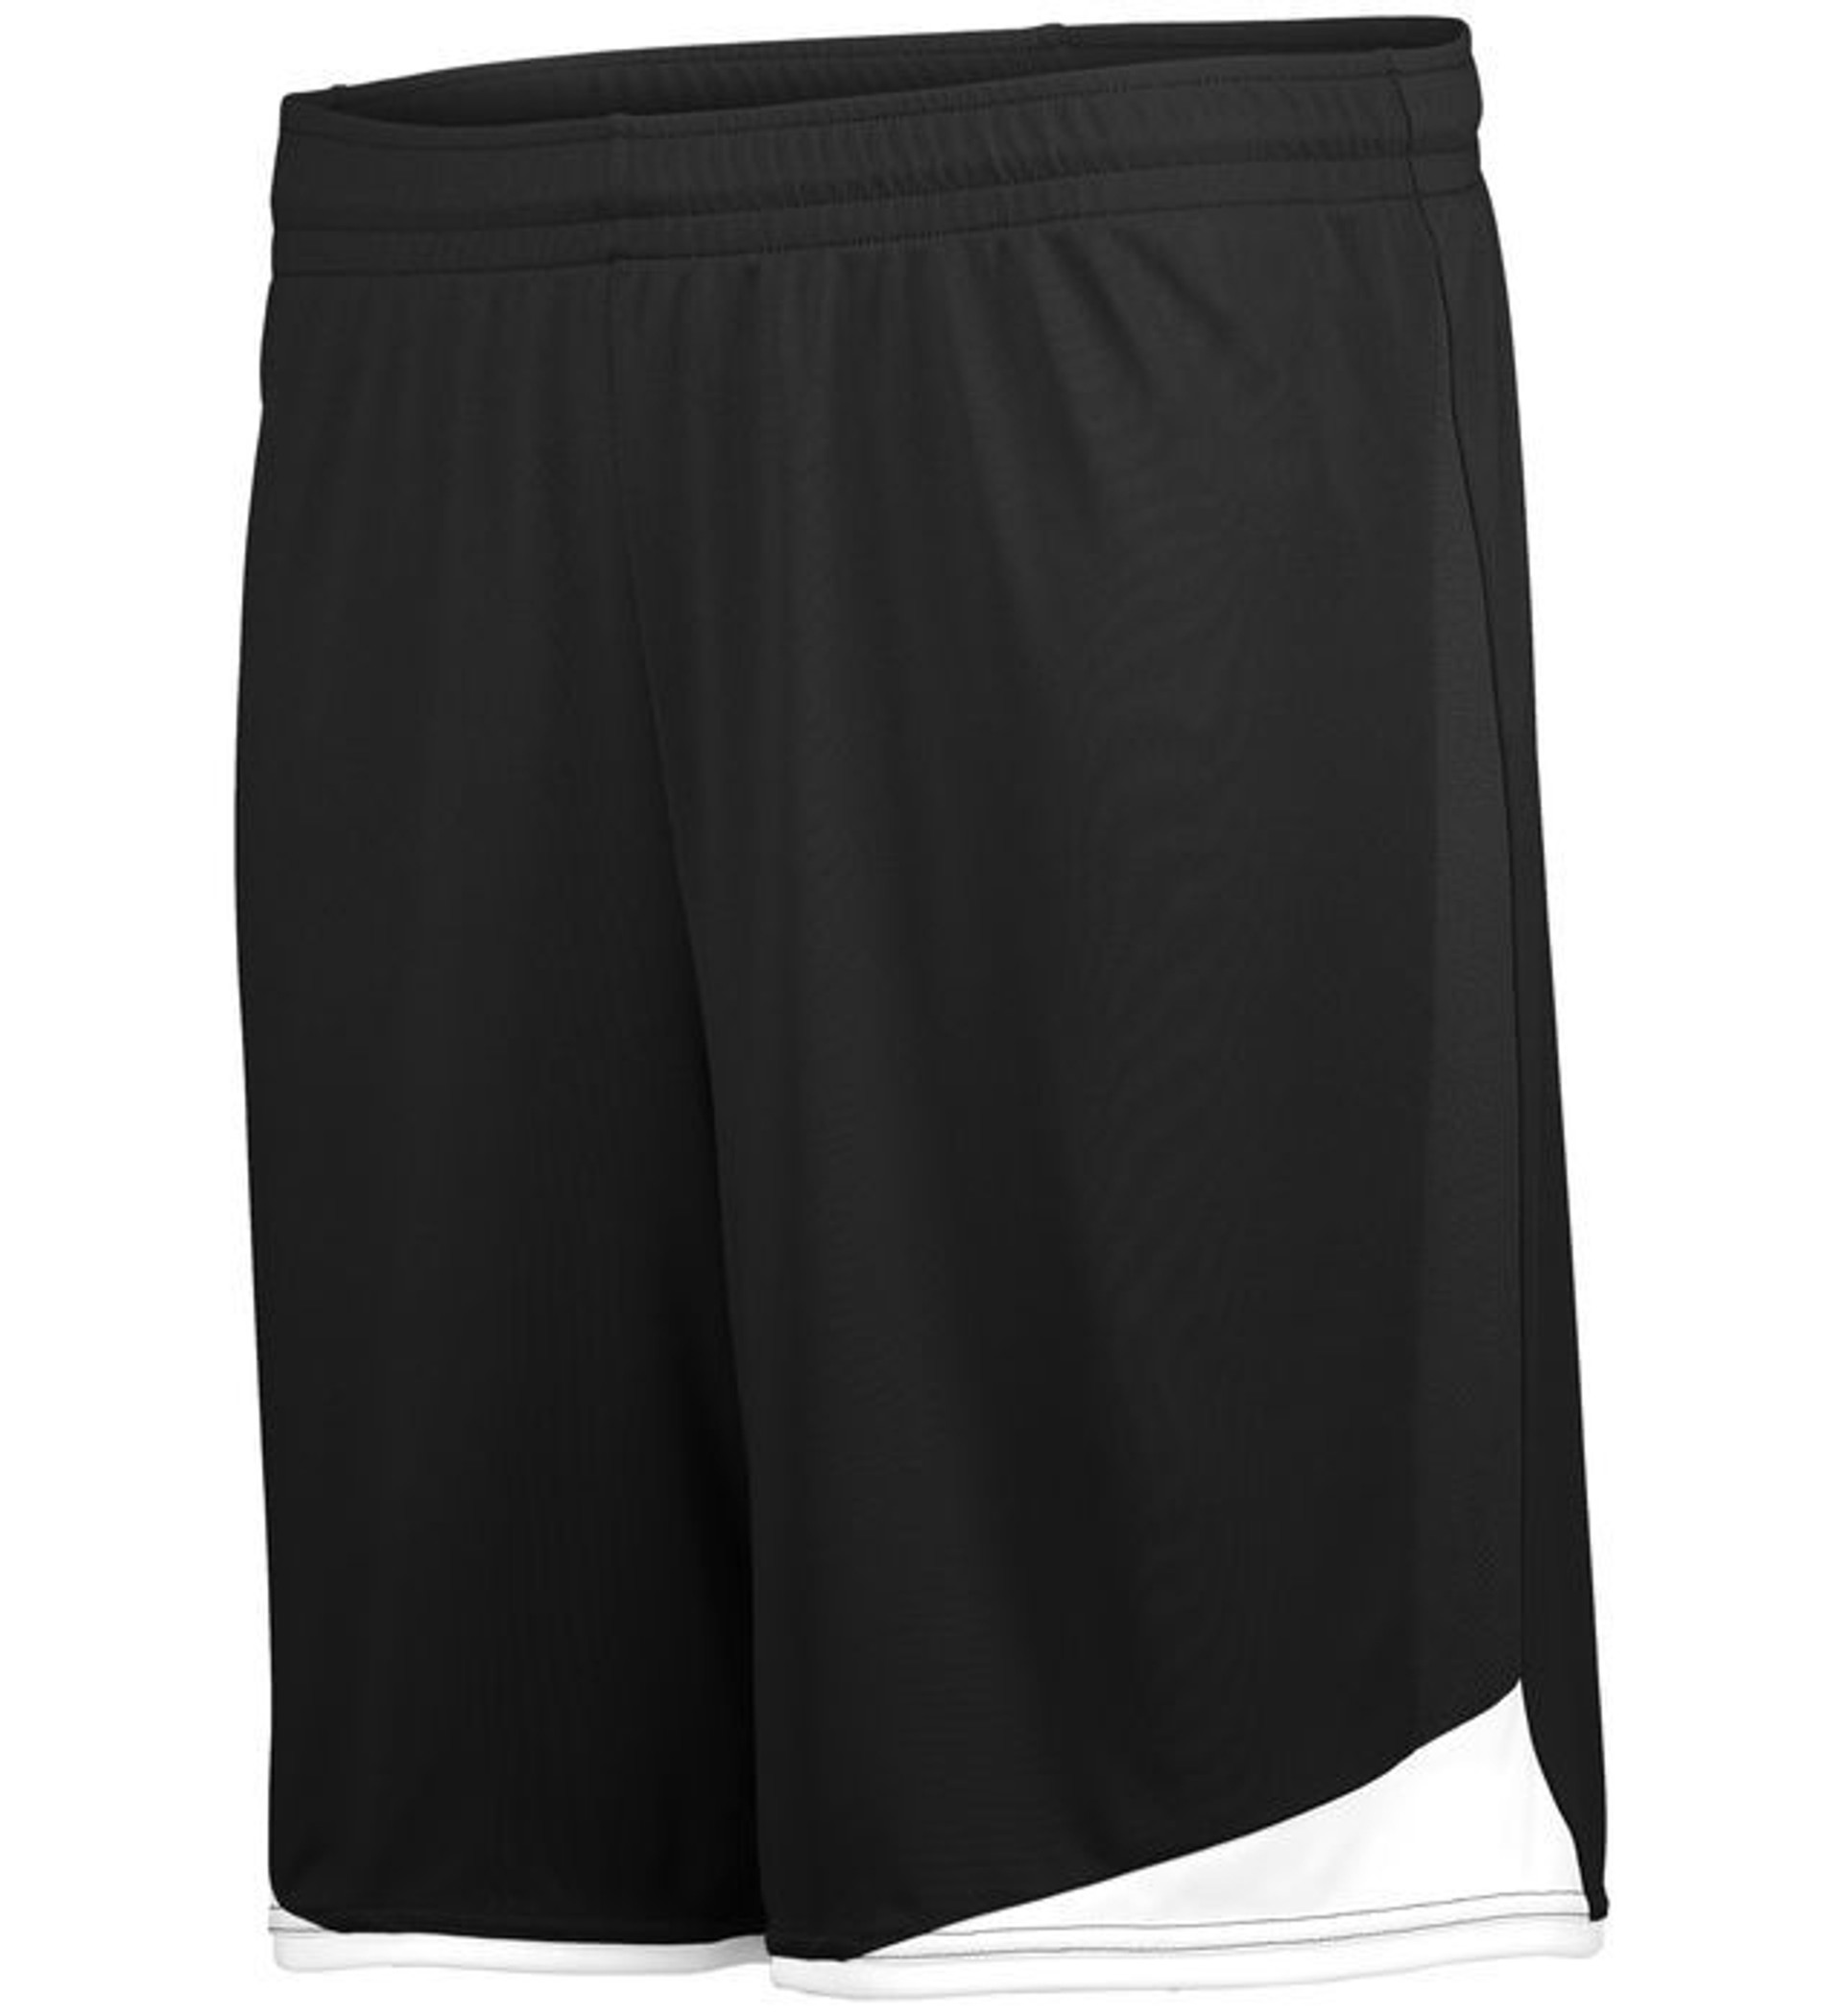 Uniforms - Soccer - Shorts - Koch Sporting Goods